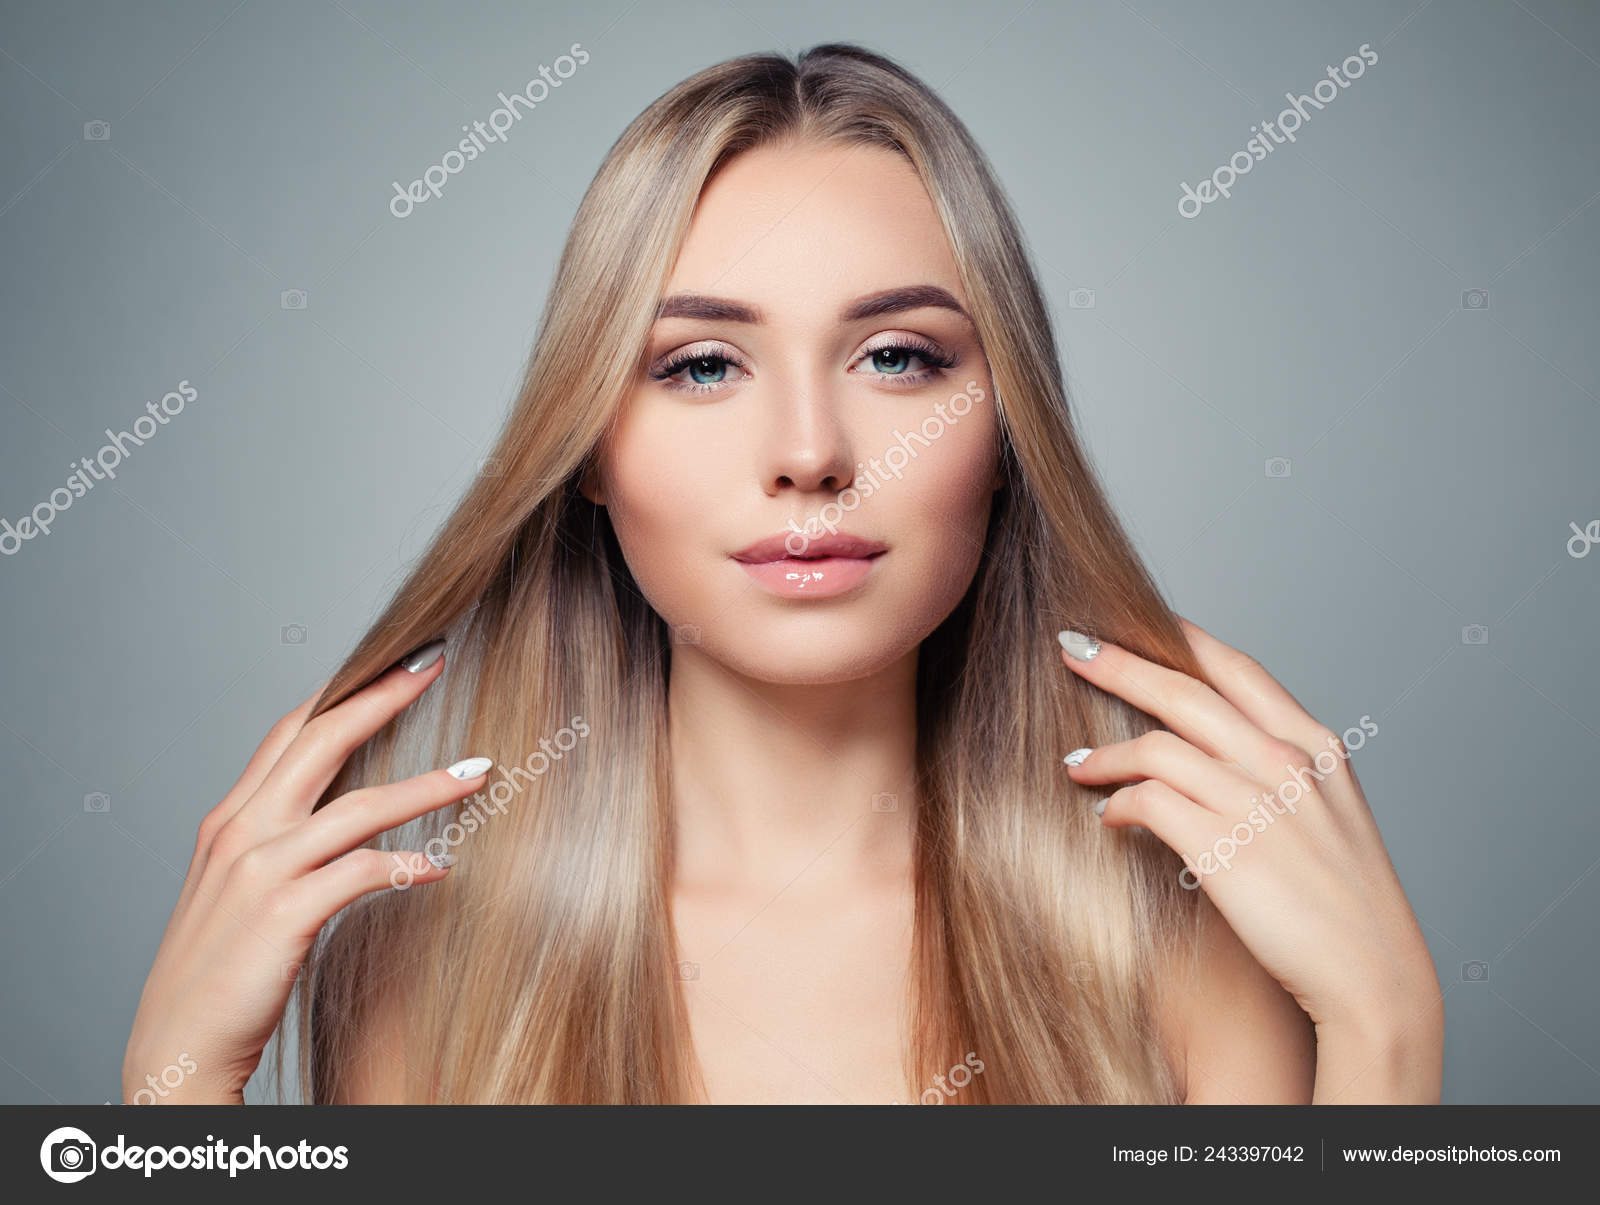 Modelo de penteado e rosto de beleza closeup linda mulher loira com cabelo  loiro comprido e liso estilo